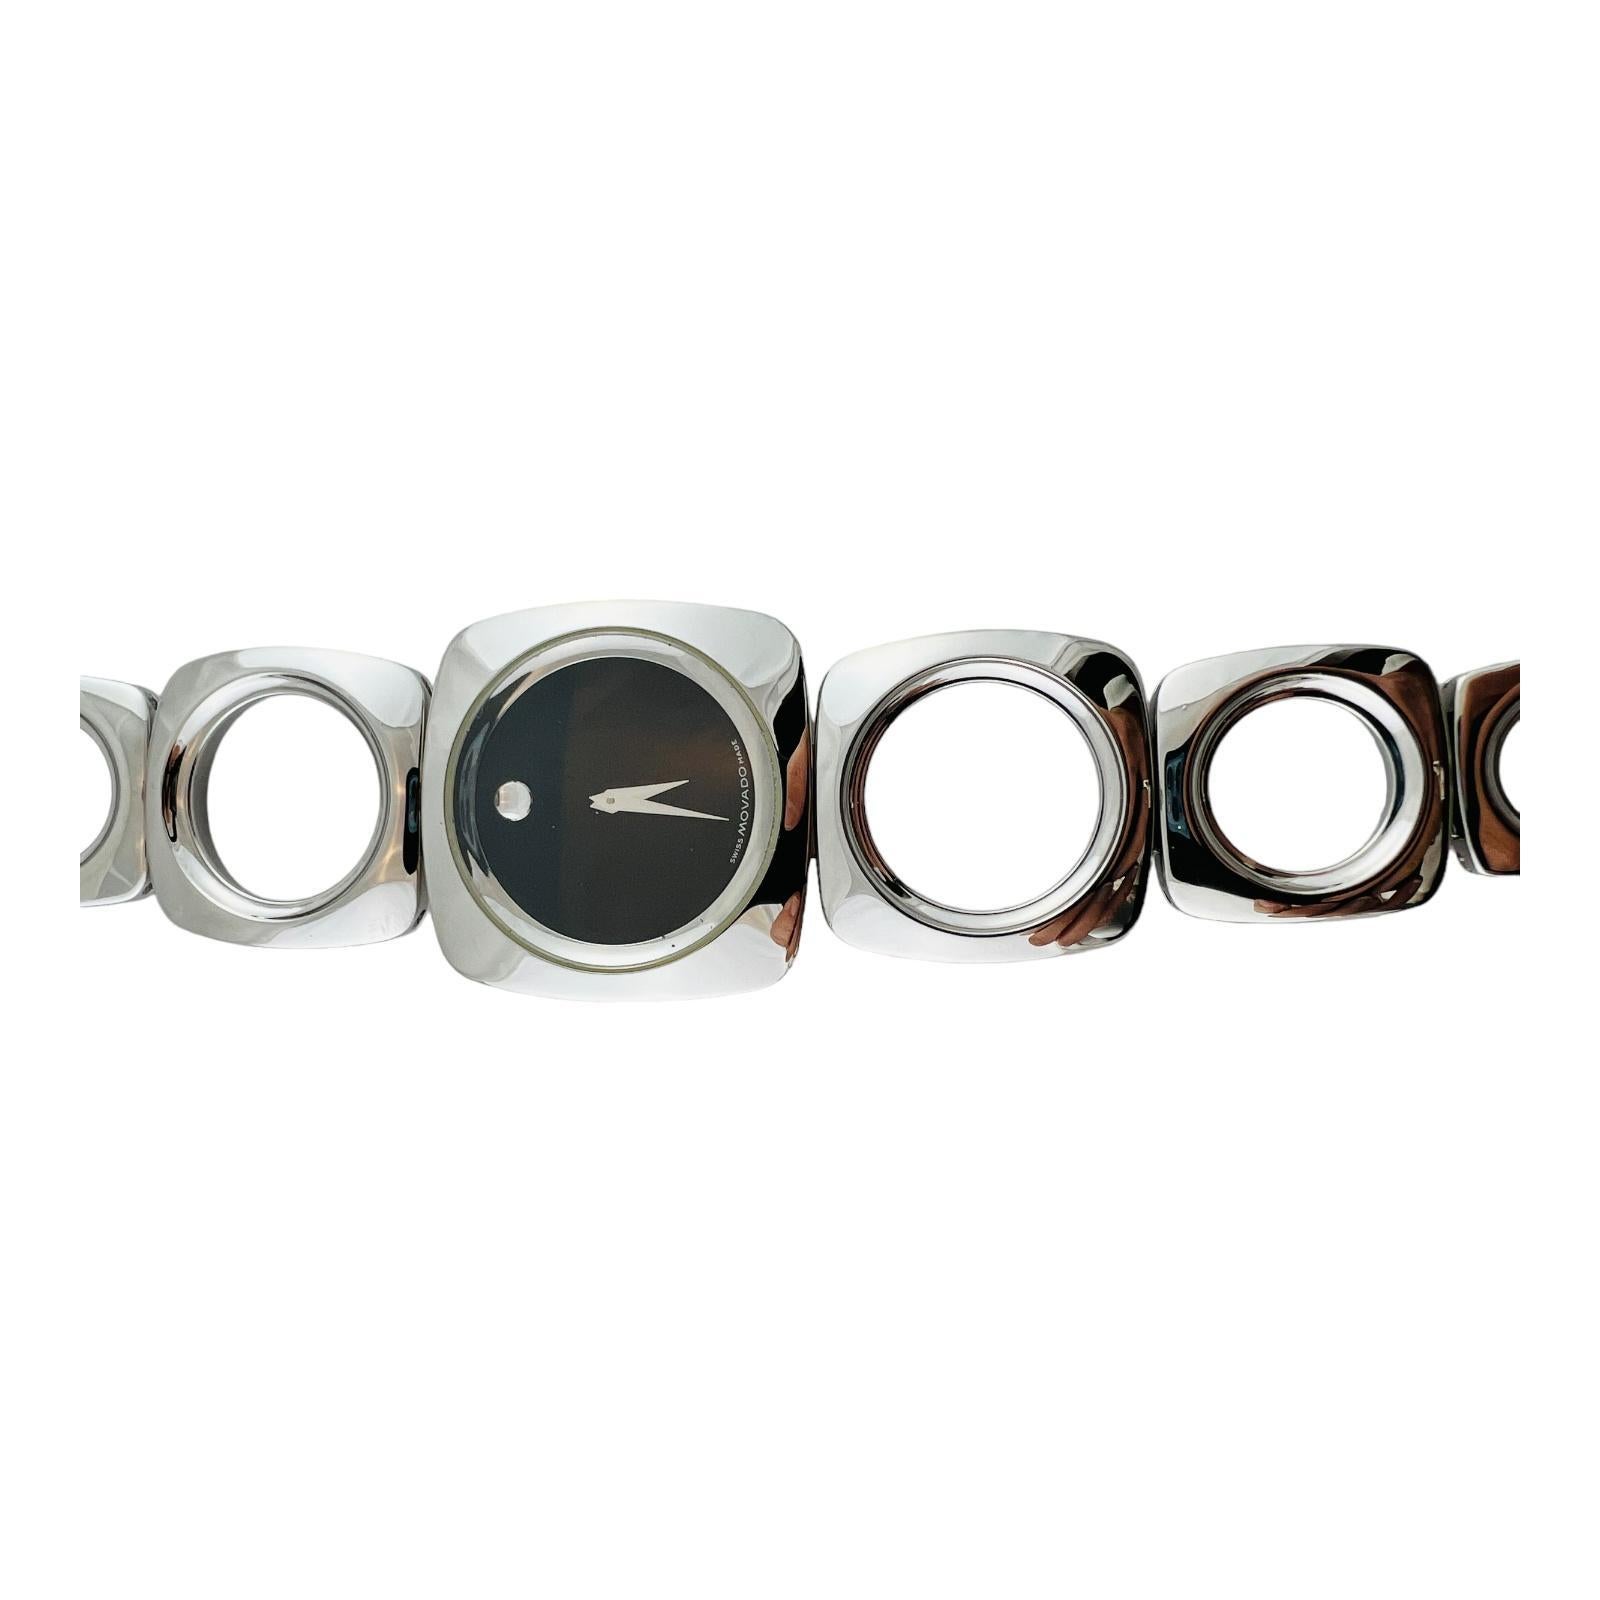 Movado Dolce Ladies Bracelet Watch 84 G2 1330 box #15796 For Sale 1